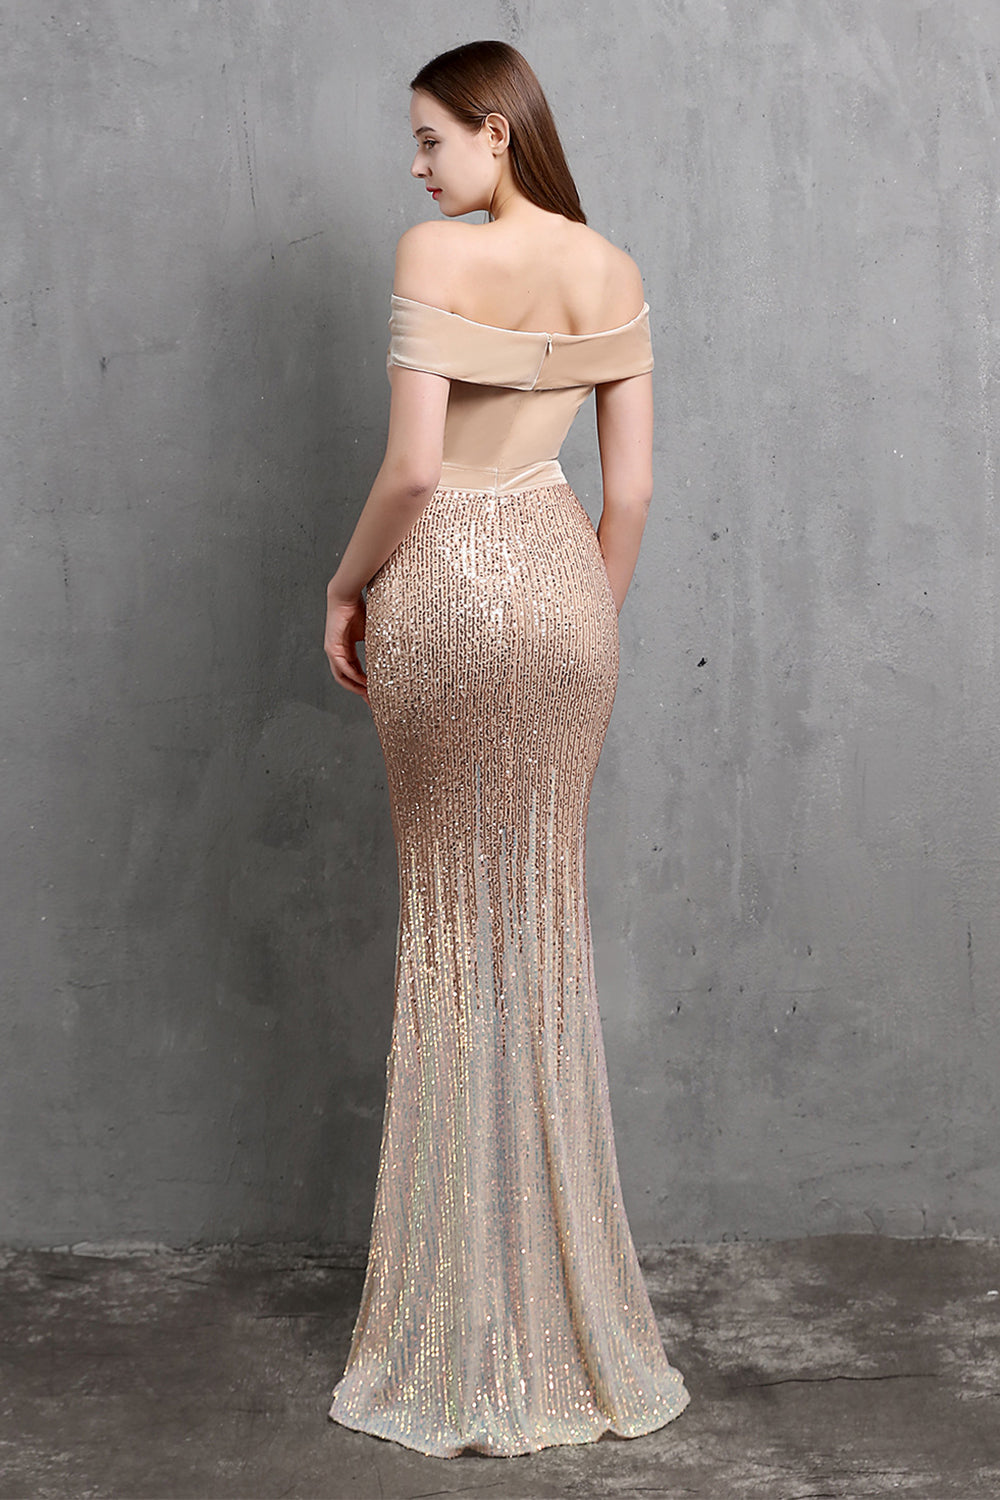 Robe gold mermaid Sequin Long Prom